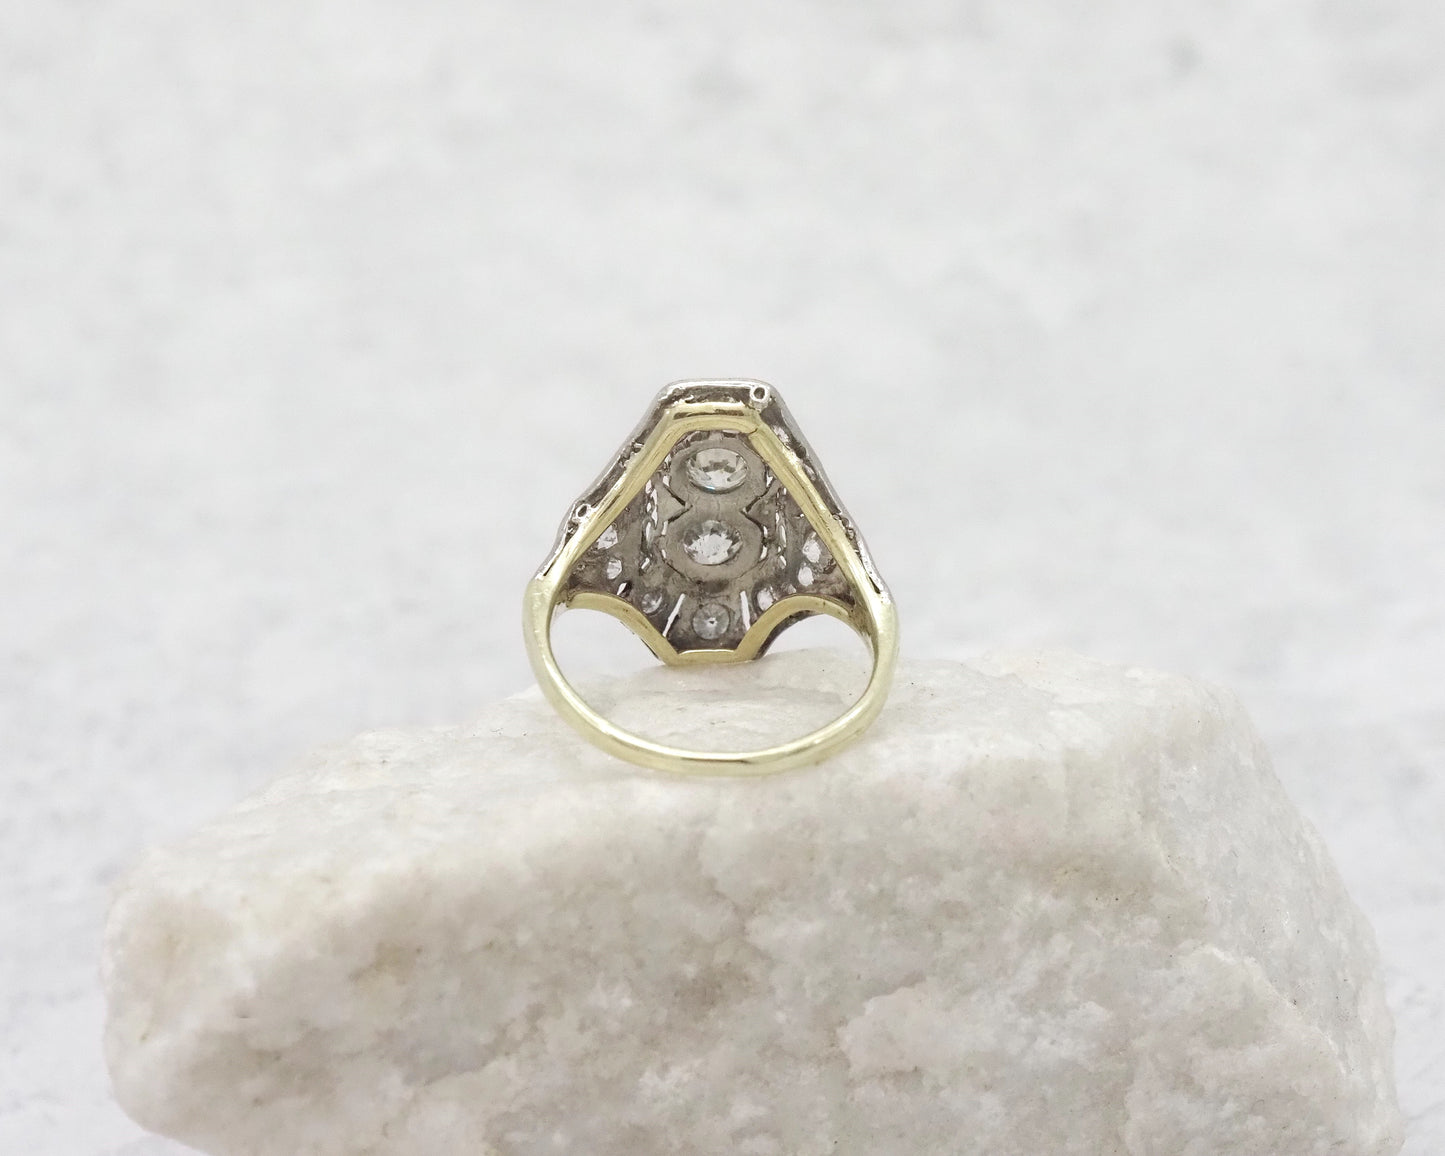 Vintage 14k White & Yellow Gold Diamond Ring, Size 3.5 (sizable) - 2.8g